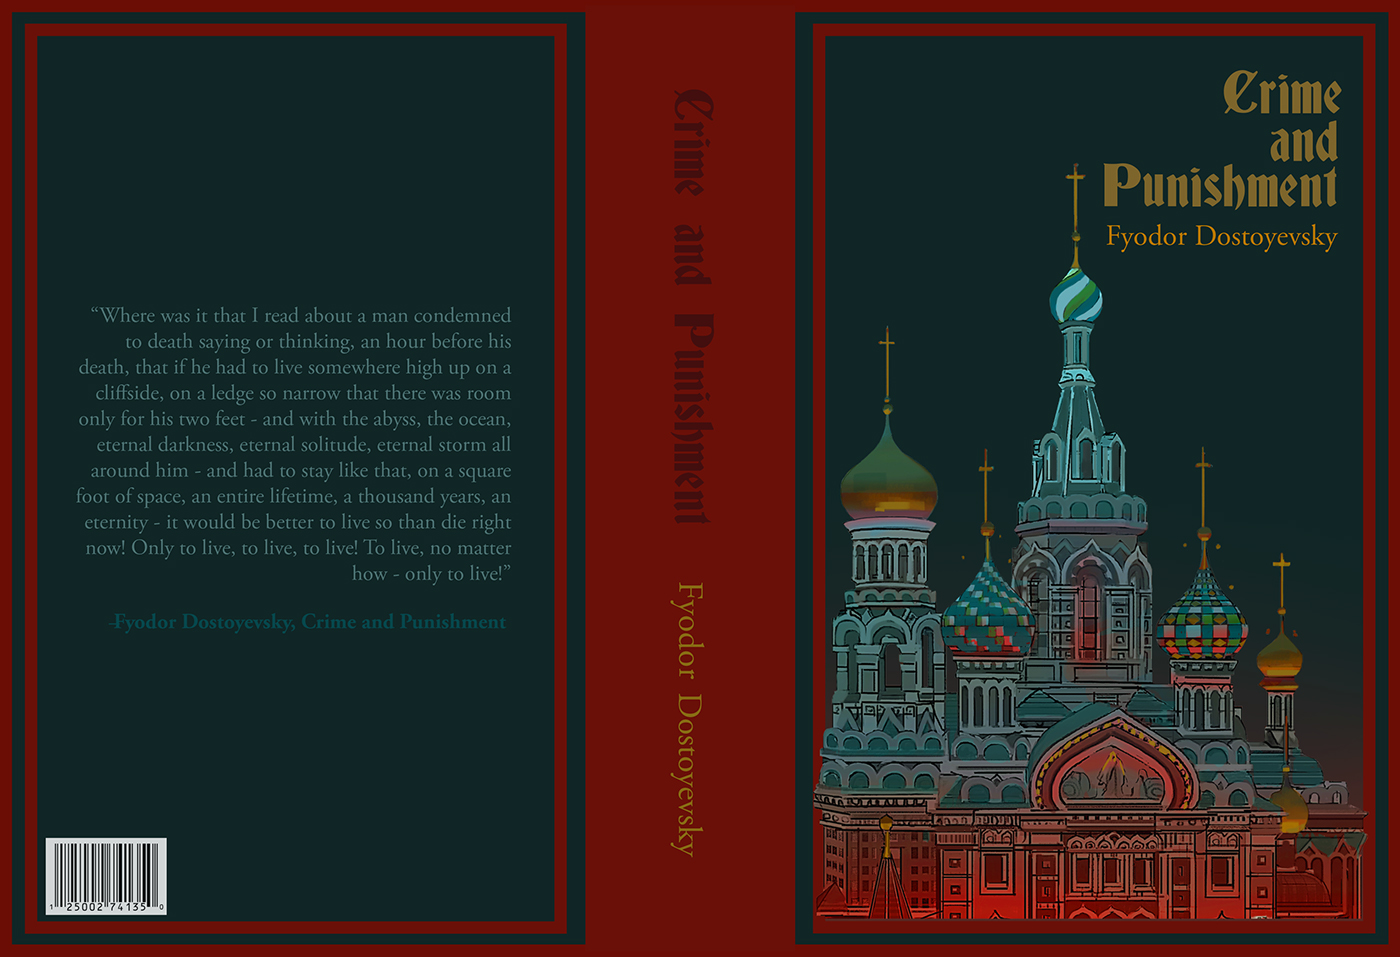 Crime and Punishment Fyodor Dostoyevsky book cover graphic design  ILLUSTRATION 